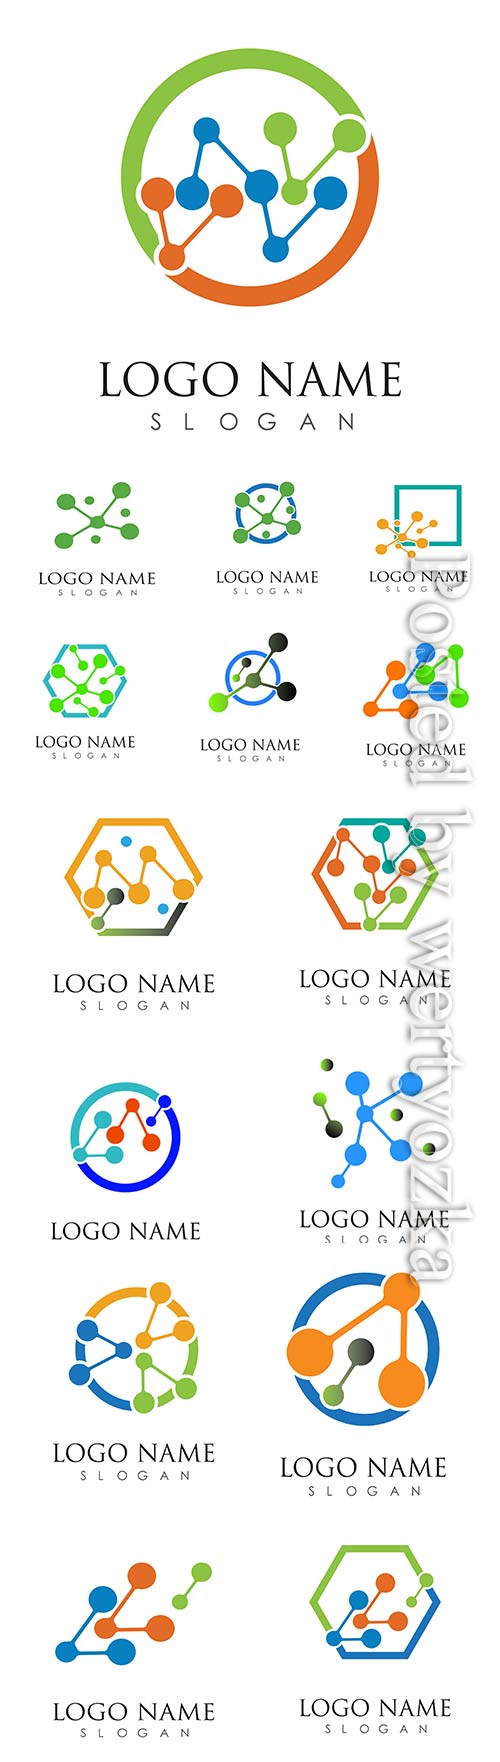 Molecule logo vector icon illustration design template